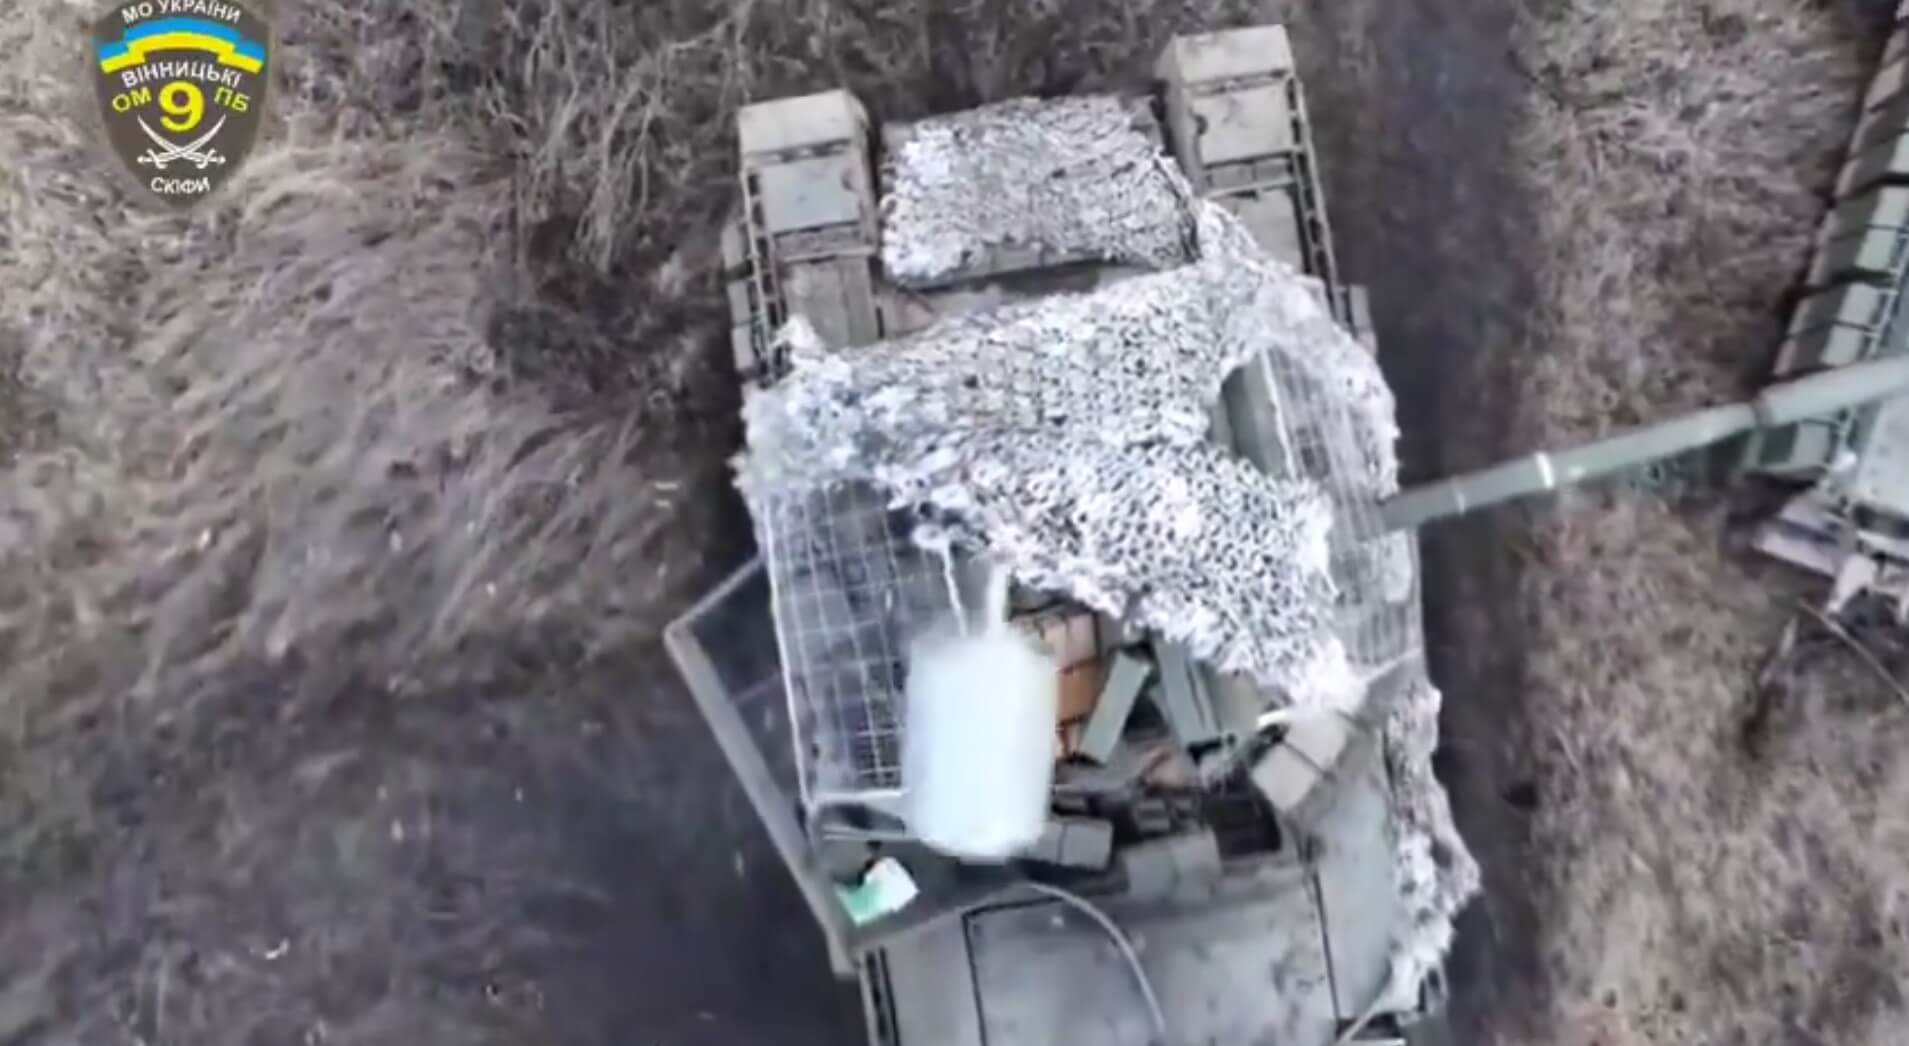 Ukrainian drone destroys a Russian tank